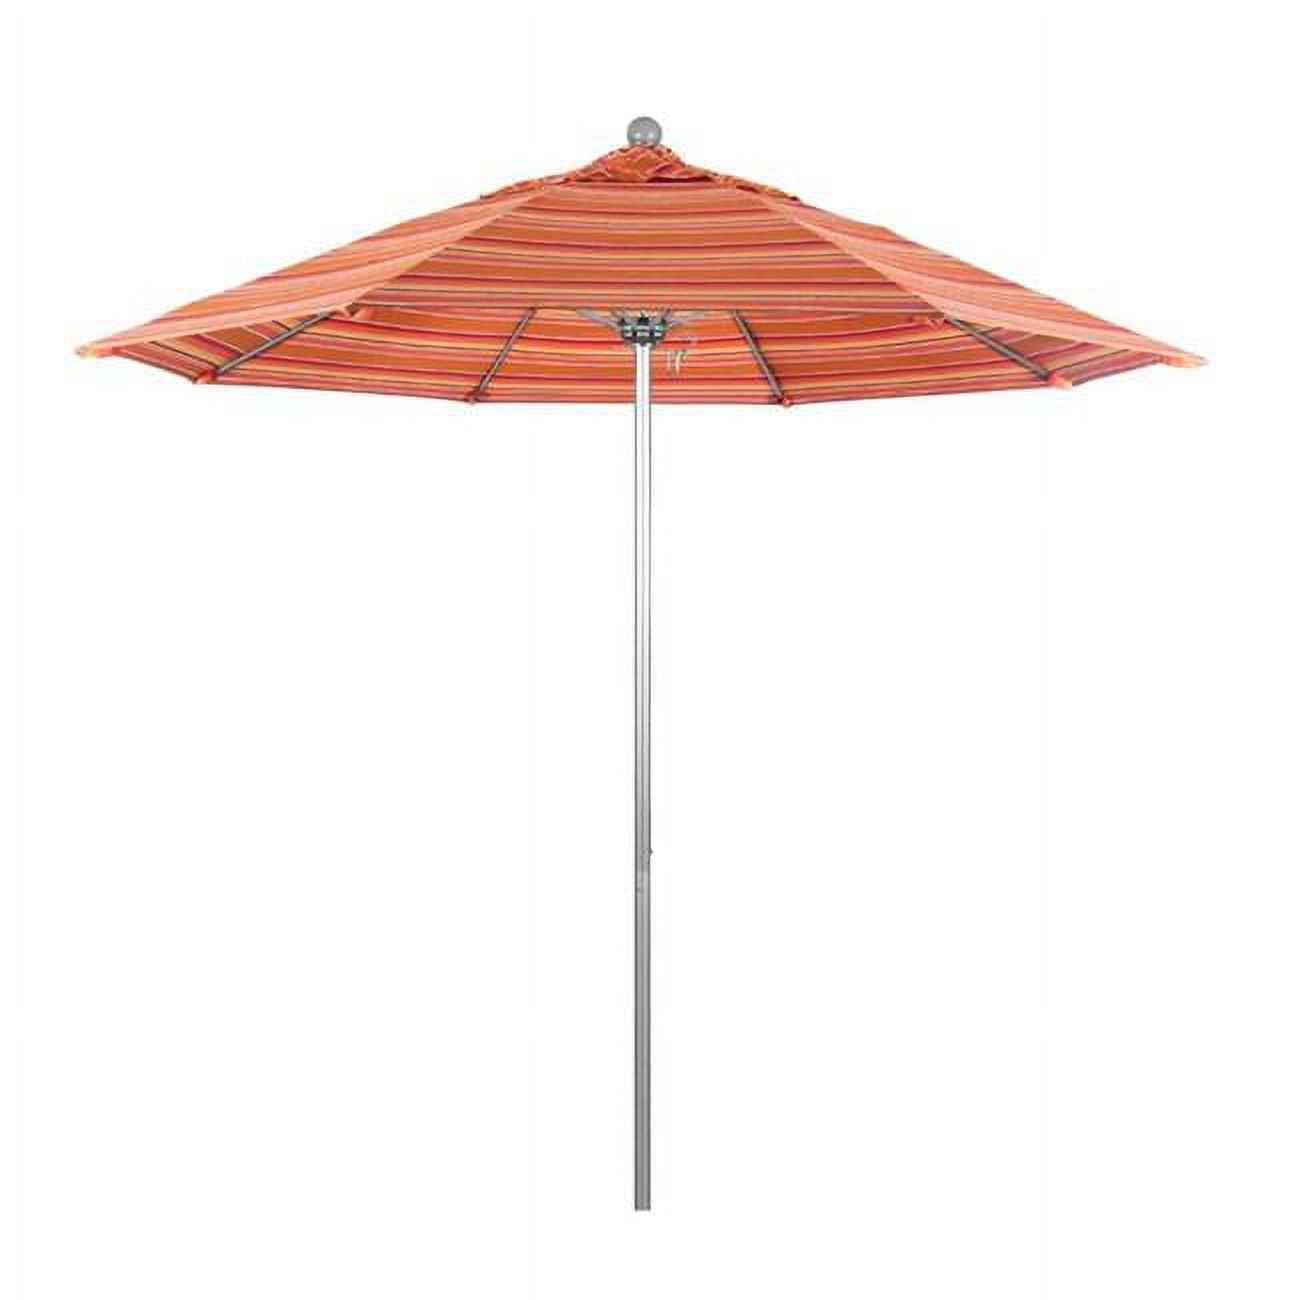 Alto908002-56000 Venture Silver Market Umbrella, Dolce Mango - 9 Ft. X 8 Ribs